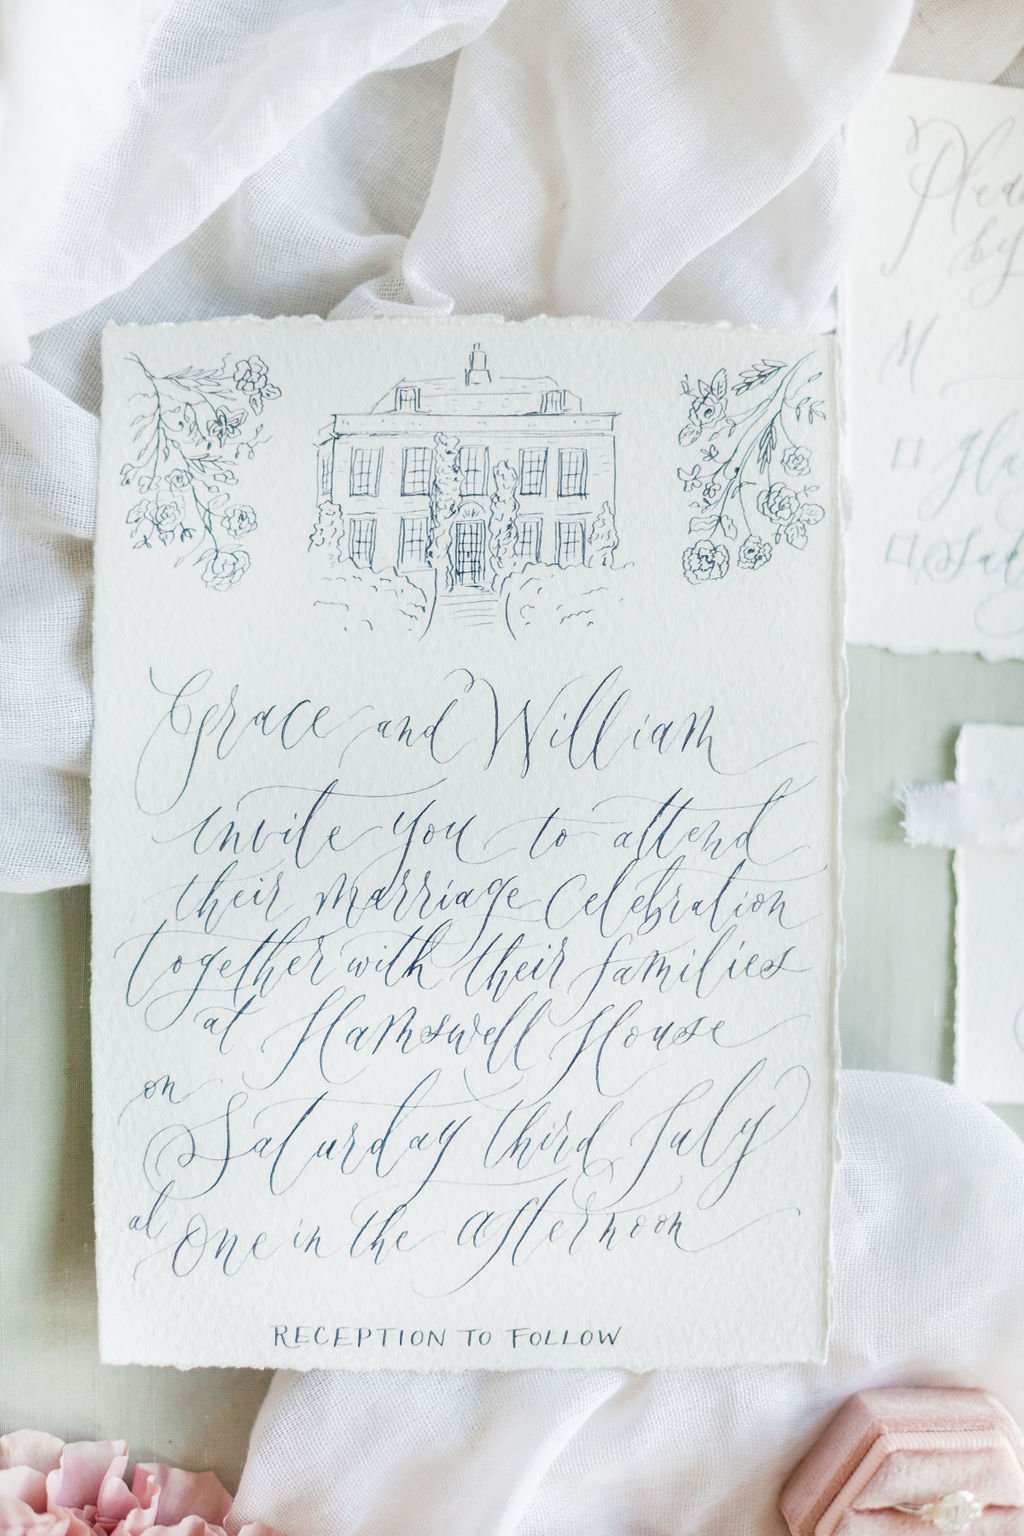 Elegant wedding invites with illustration and calligraphy